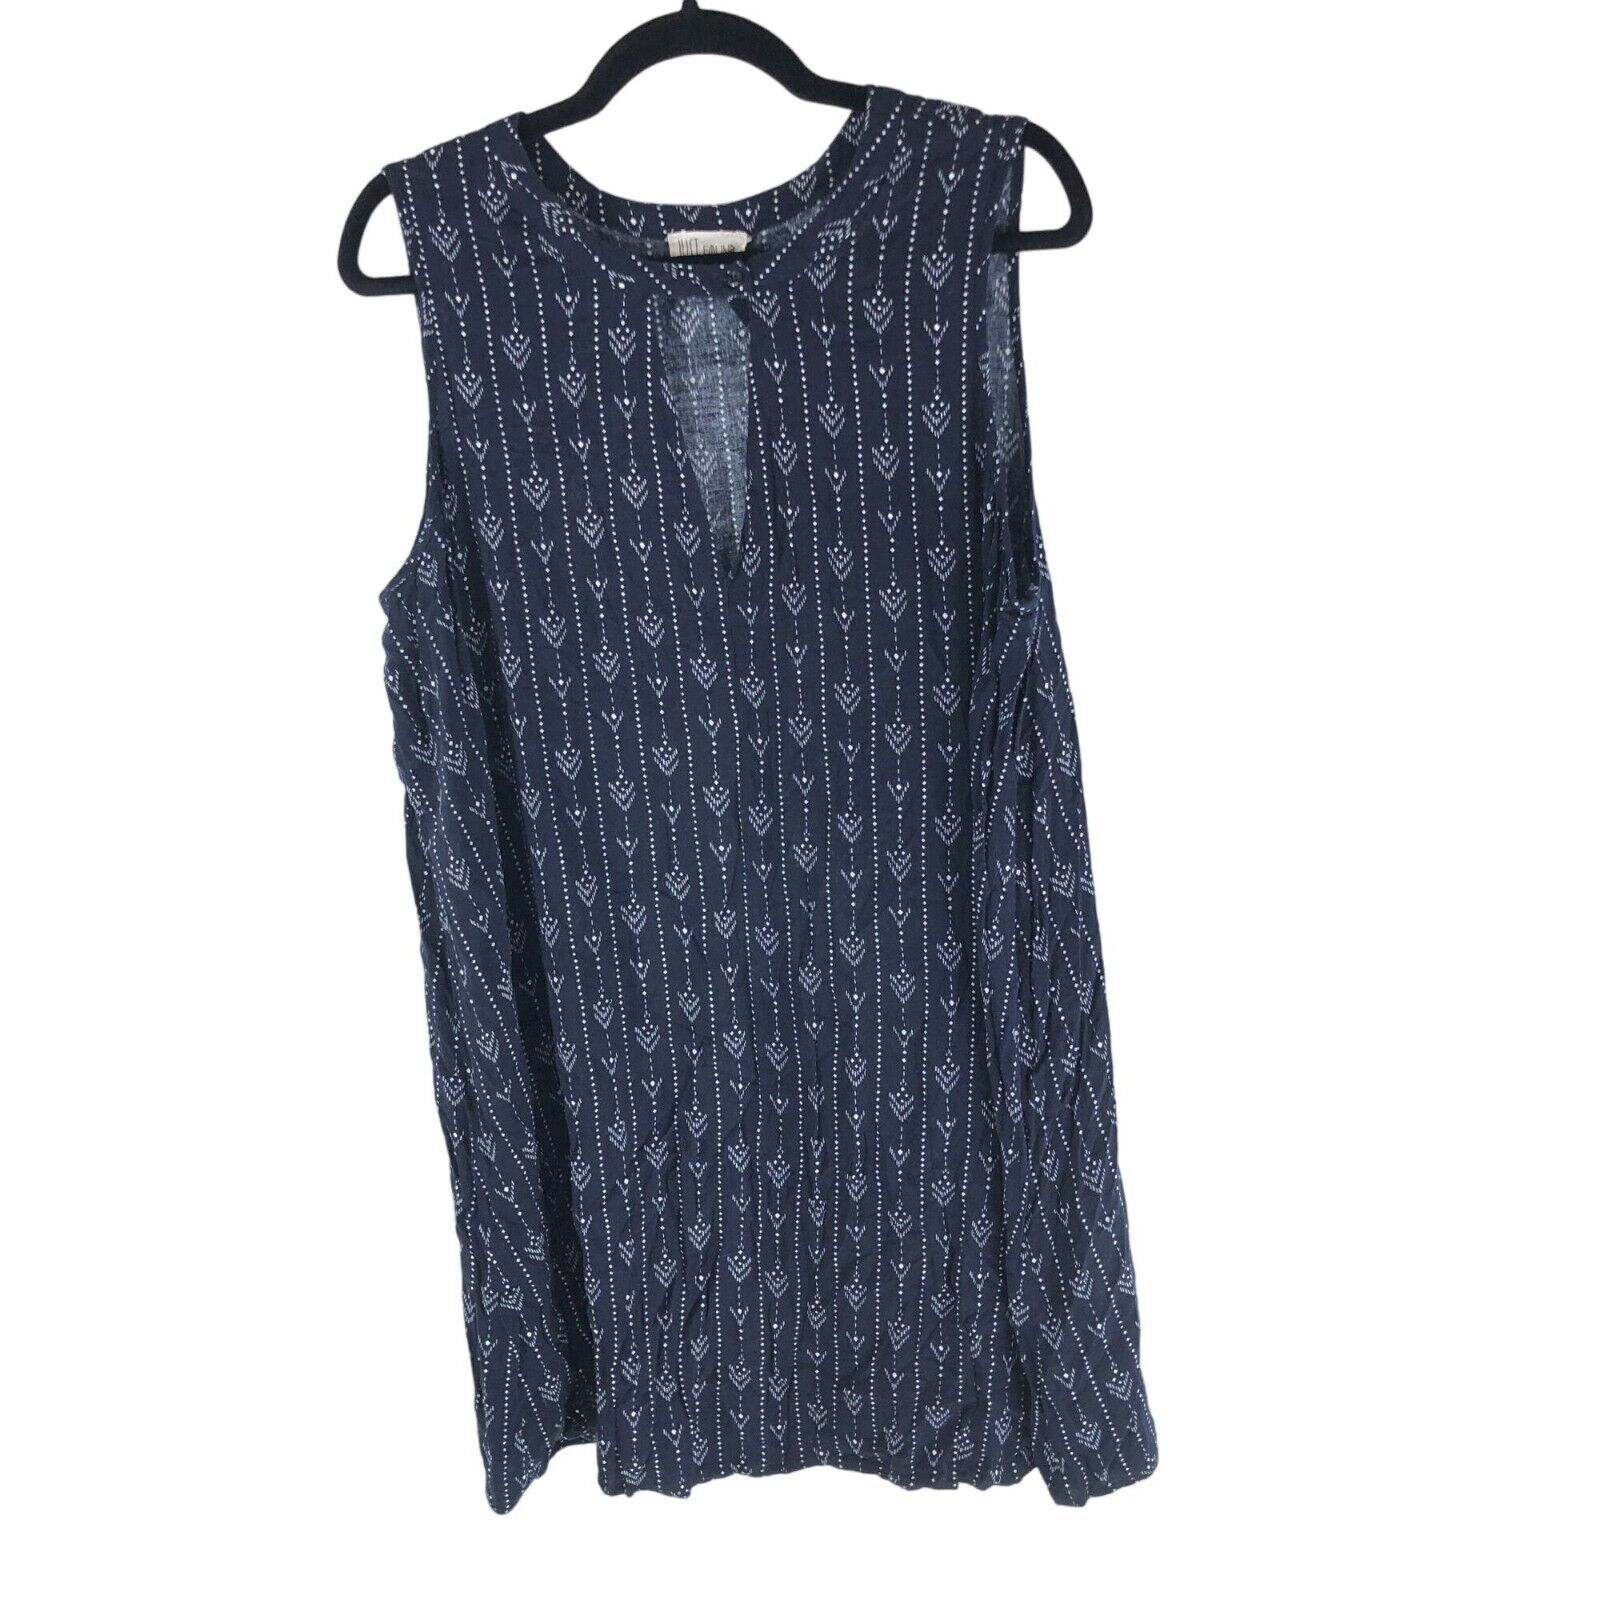 Primary image for Just Found Shift Dress Keyhole Neckline Sleeveless Geometric Navy Blue 3X